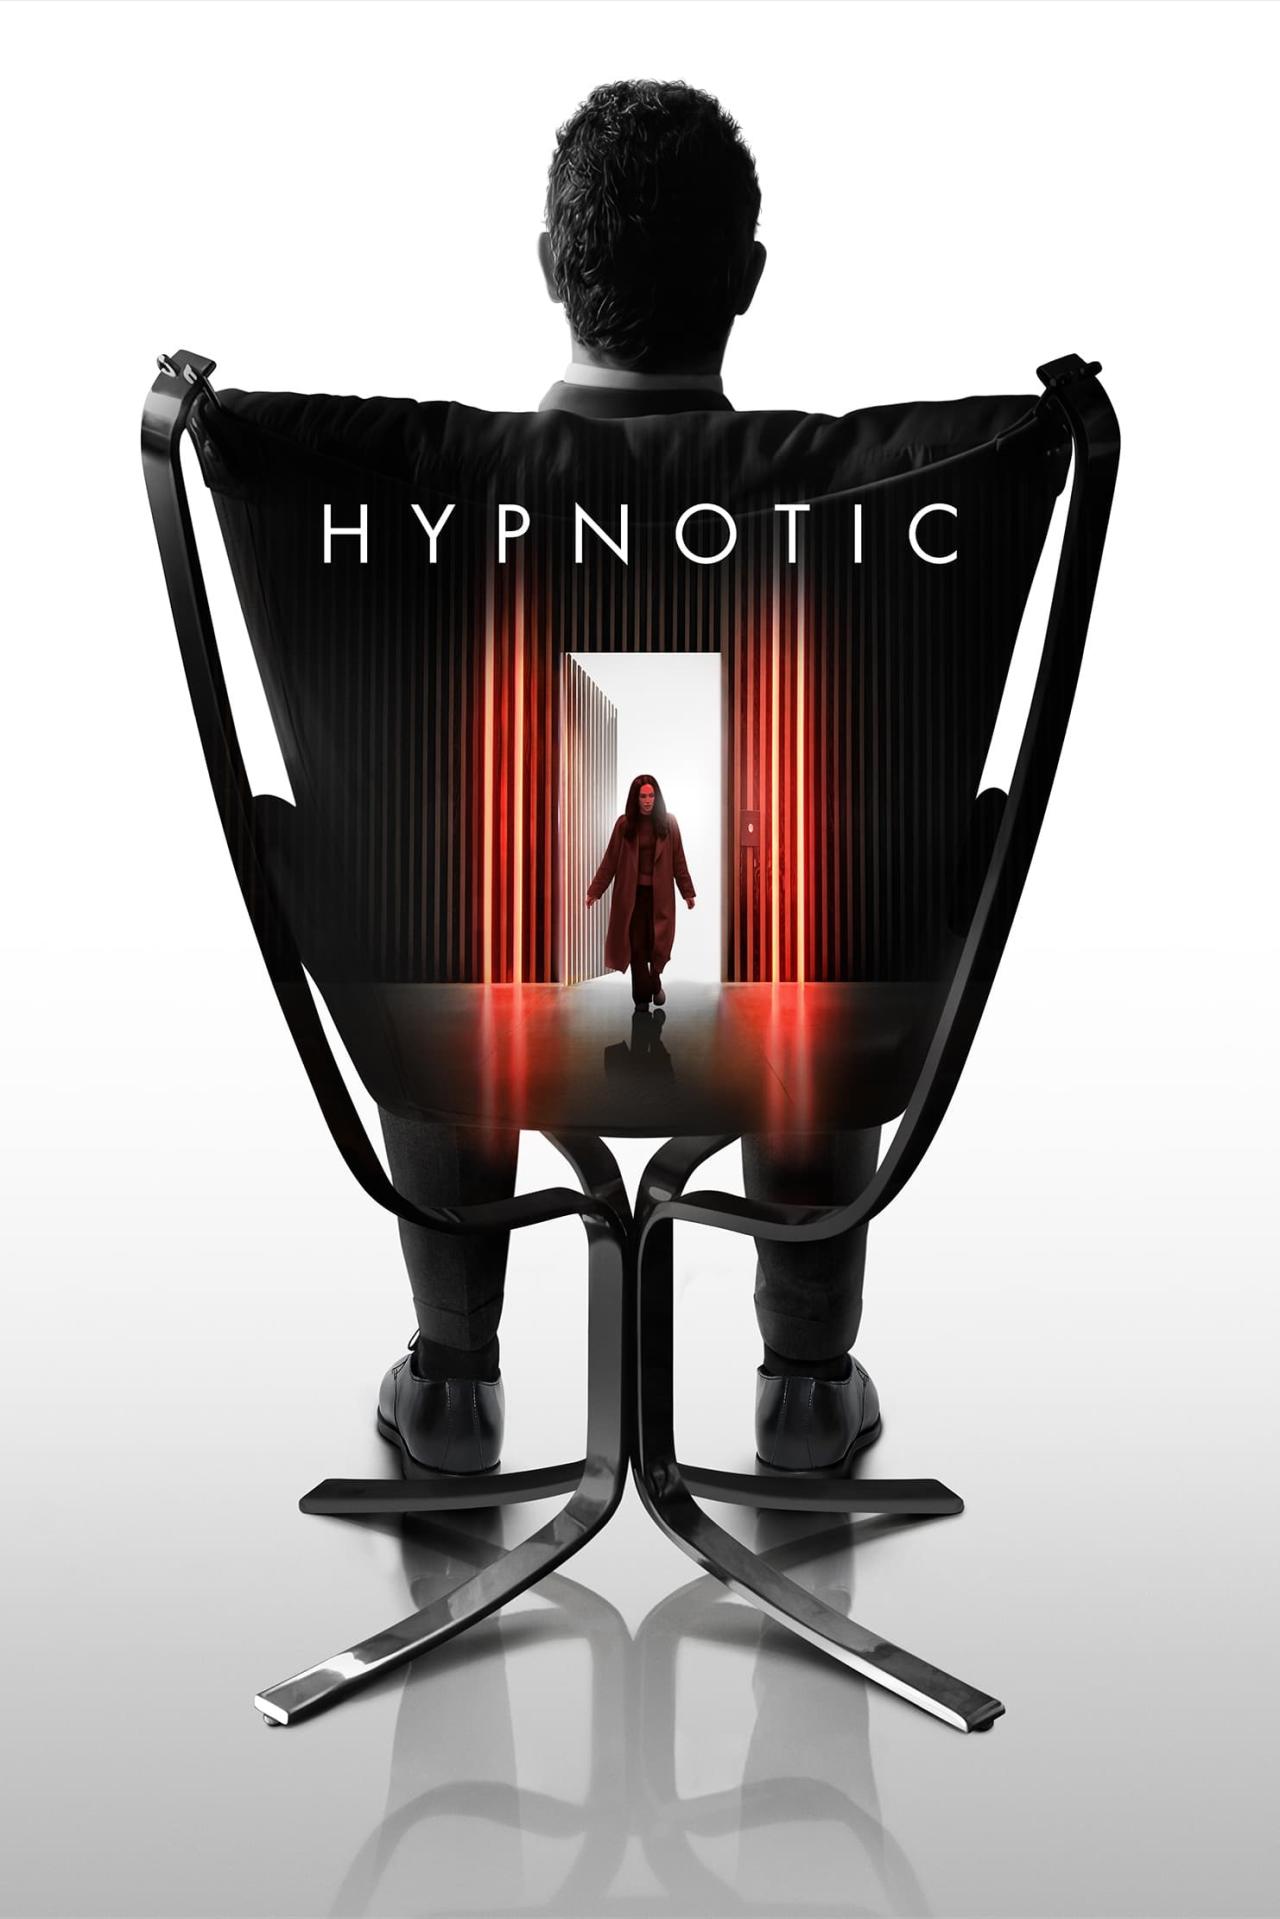 Affiche du film Hypnotique